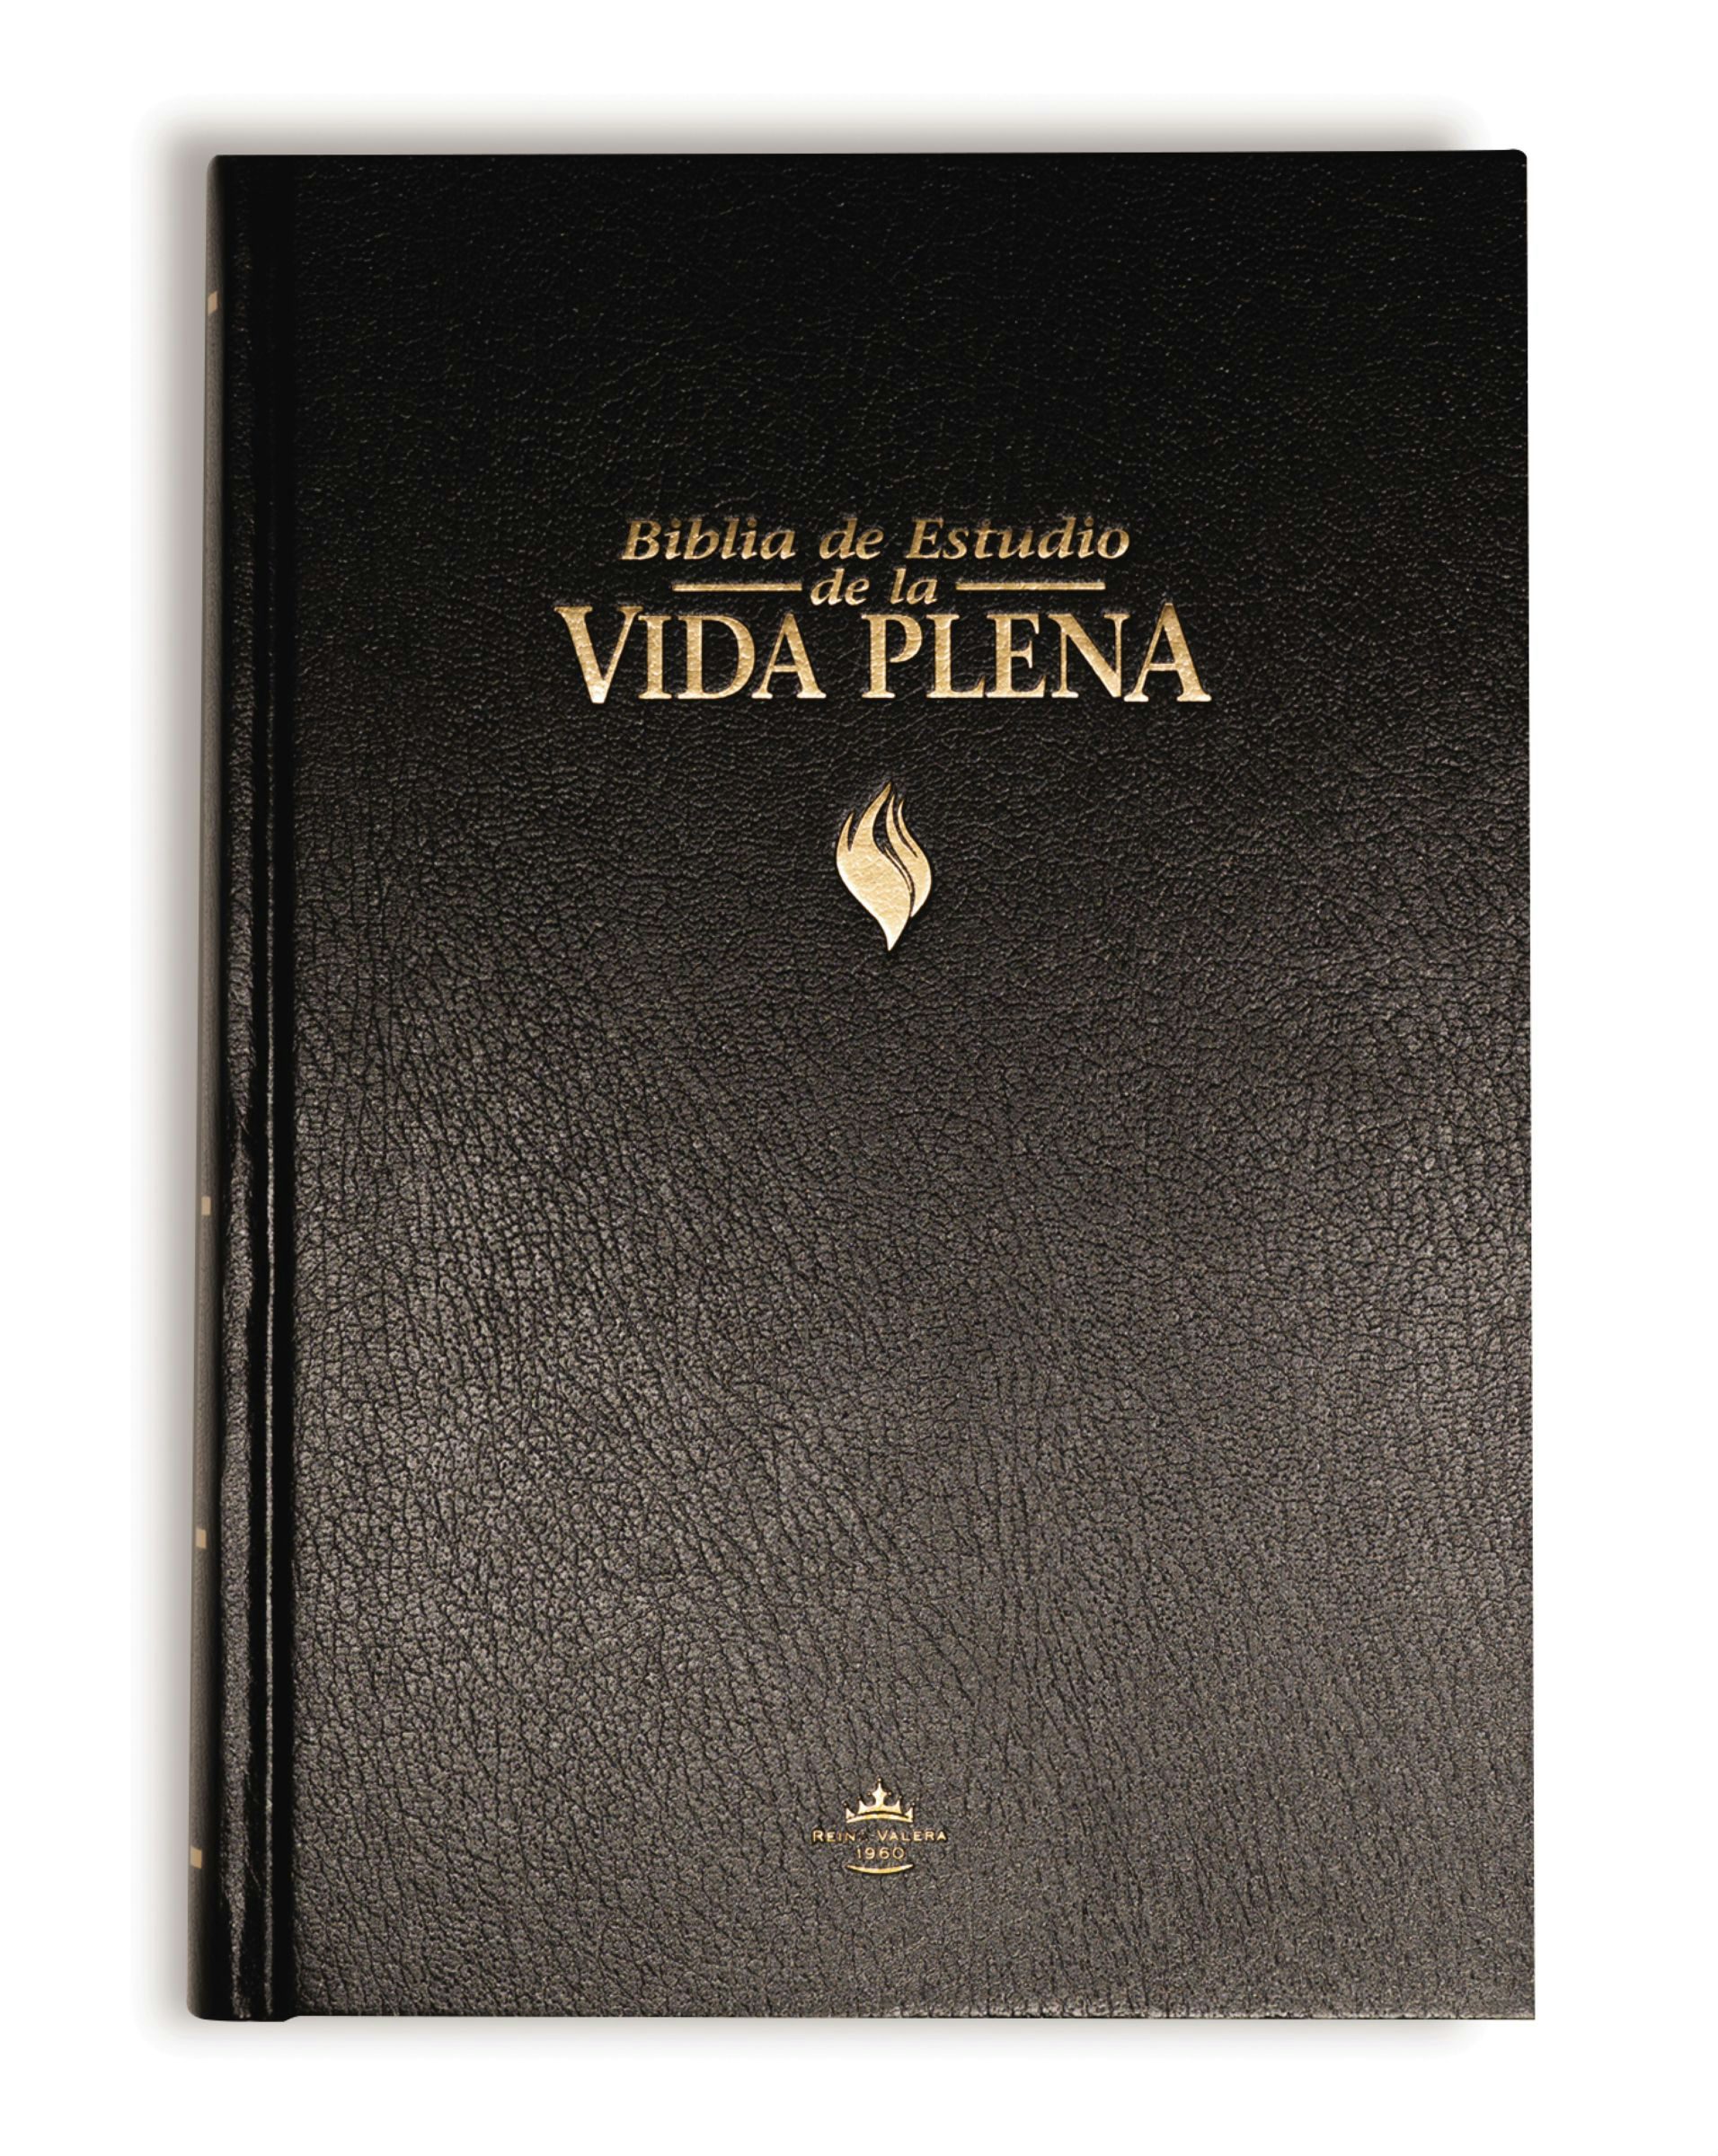 la biblia reina valera 1960 hablada en espaol